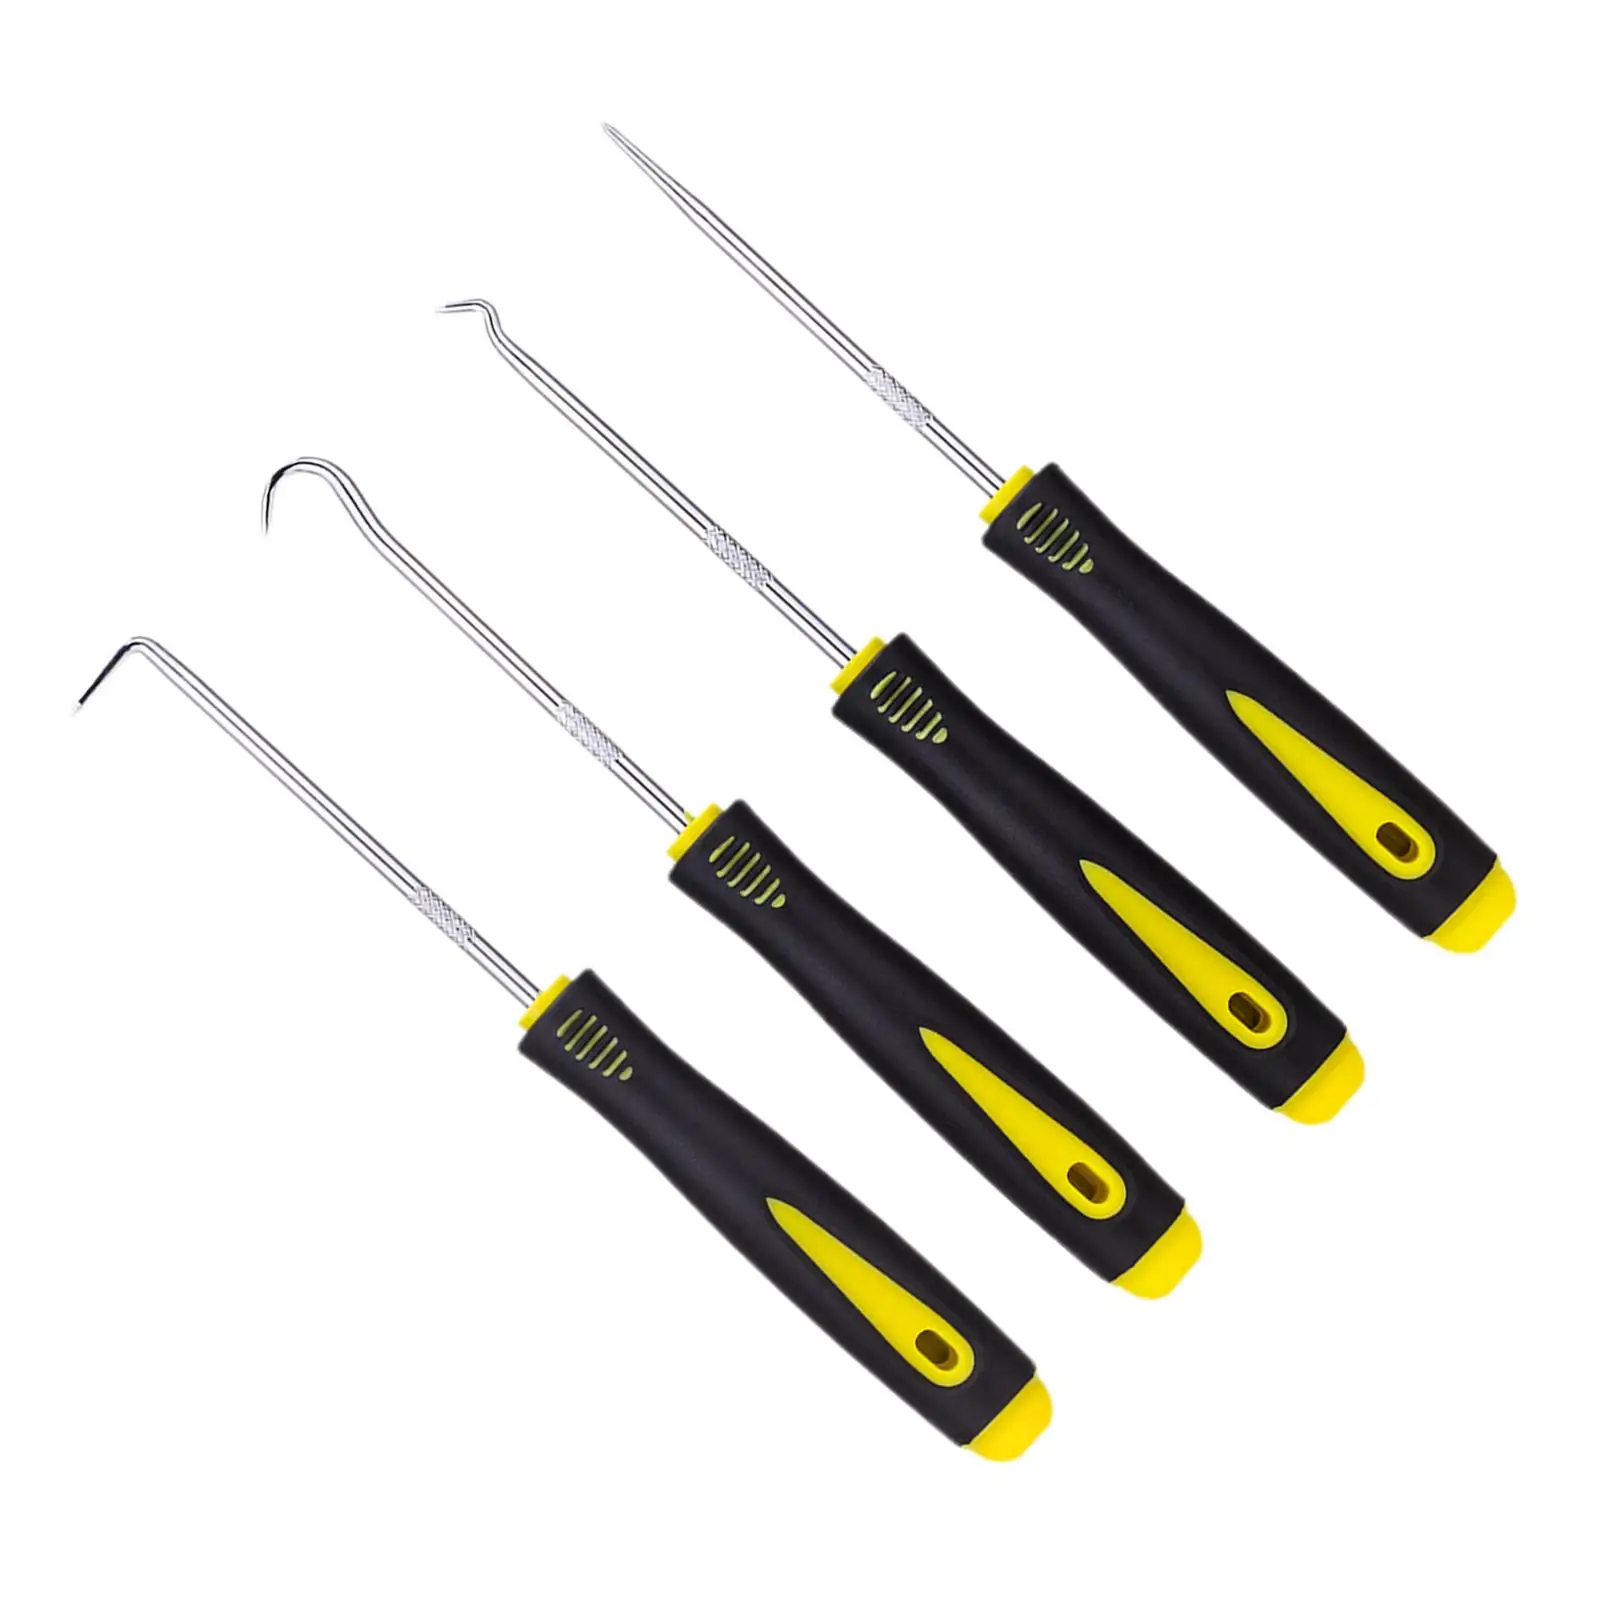 4 Hook and Pick Set -  Alloy  Tools, Car  Seal/O- Seal Gasket Pick Mini Precision Hooks Puller Remover, Workshop Tools